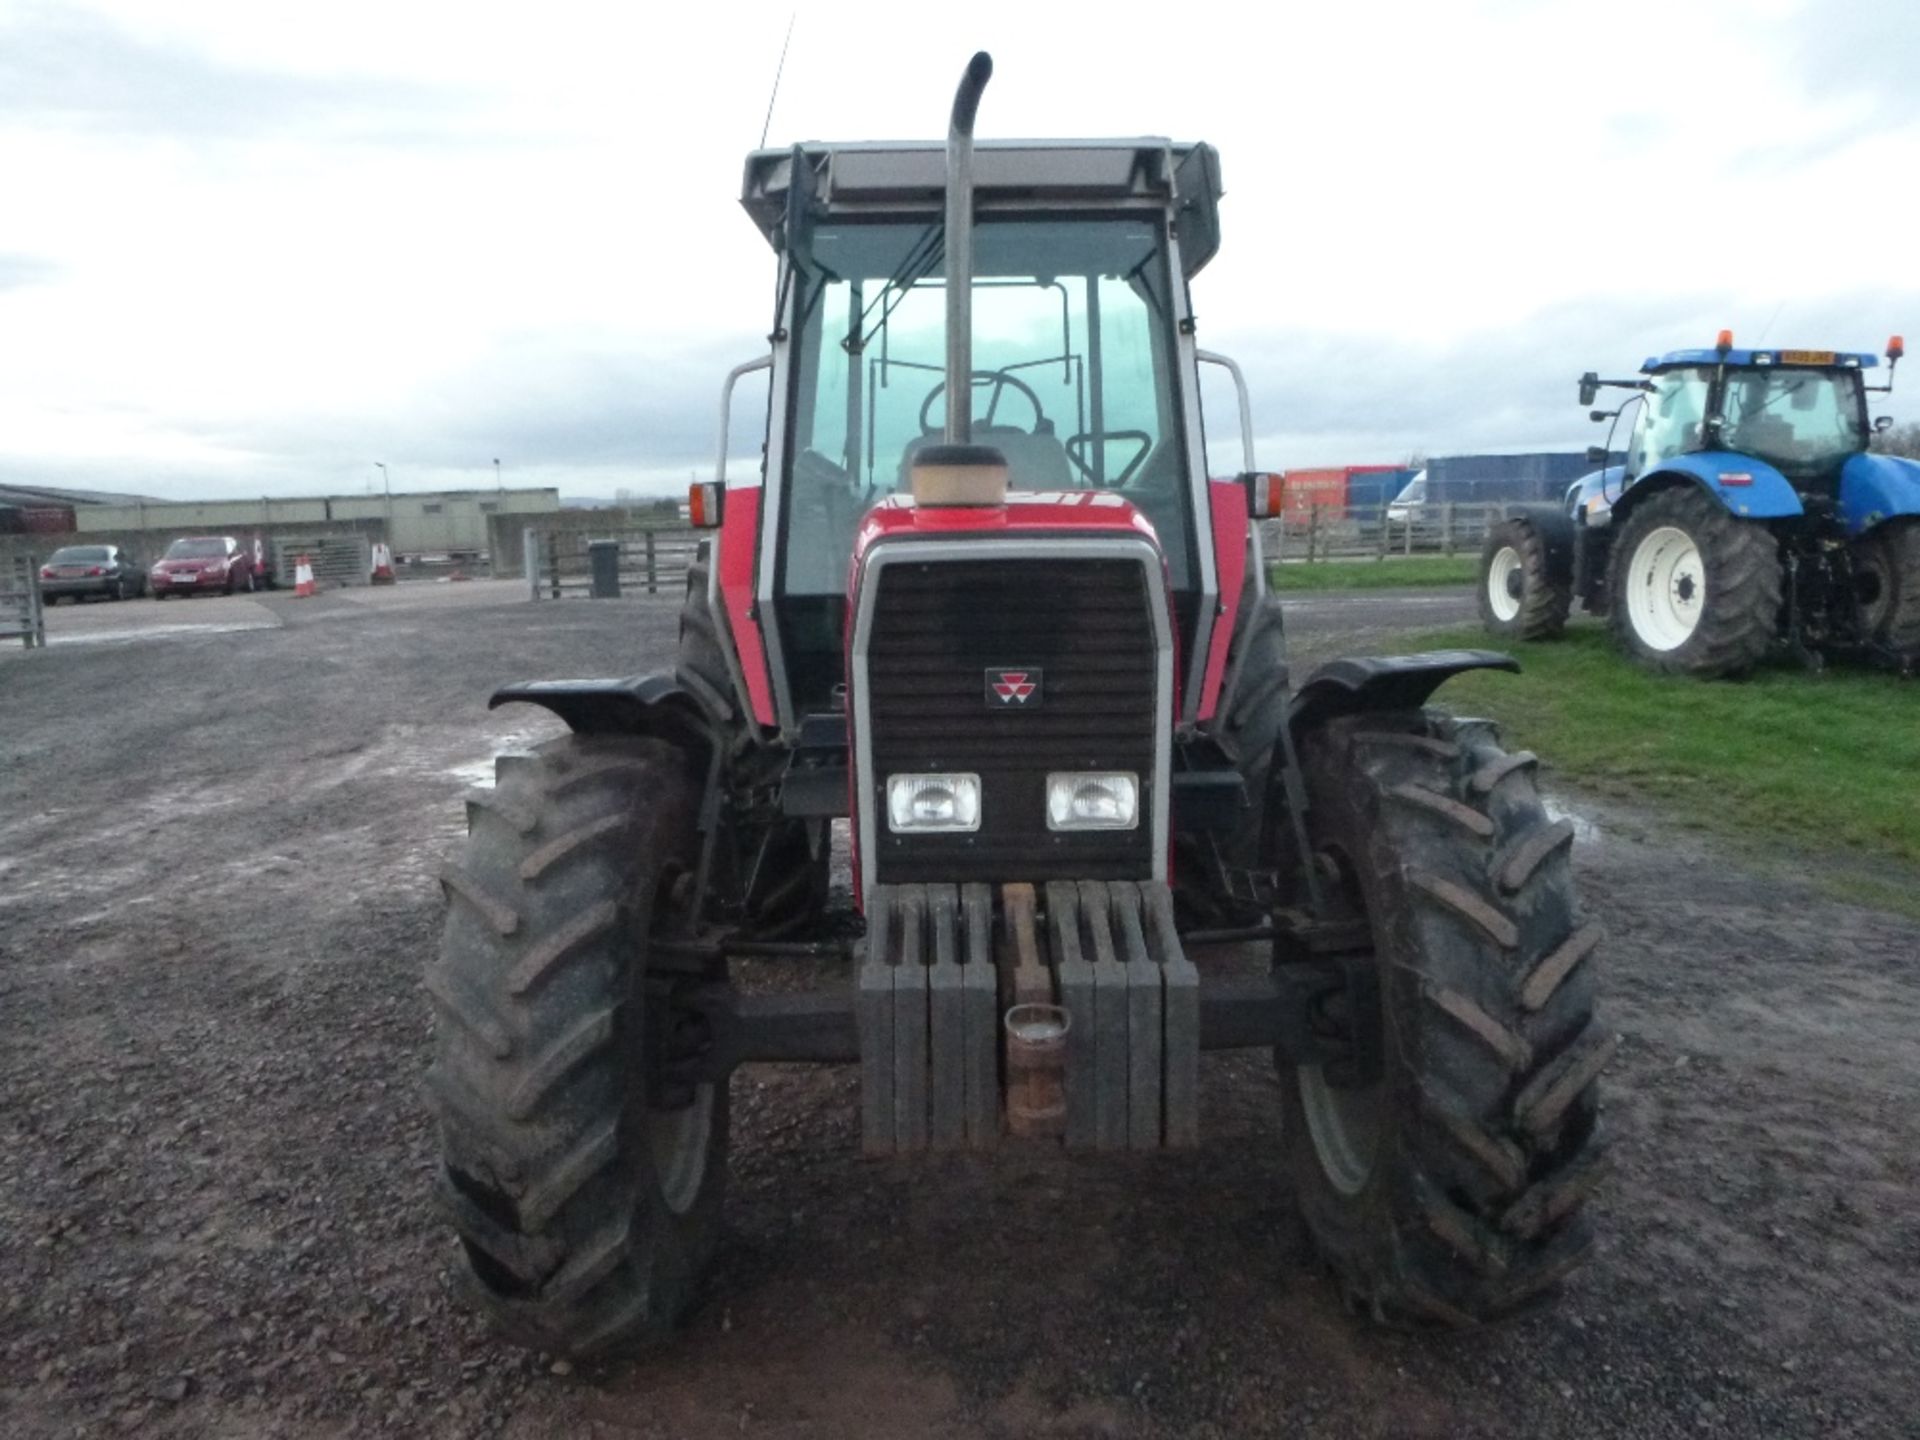 Massey Ferguson 3085 4x4 Dynashift Tractor. 2700 hrs
Date of Reg 16/03/95 - Image 2 of 8